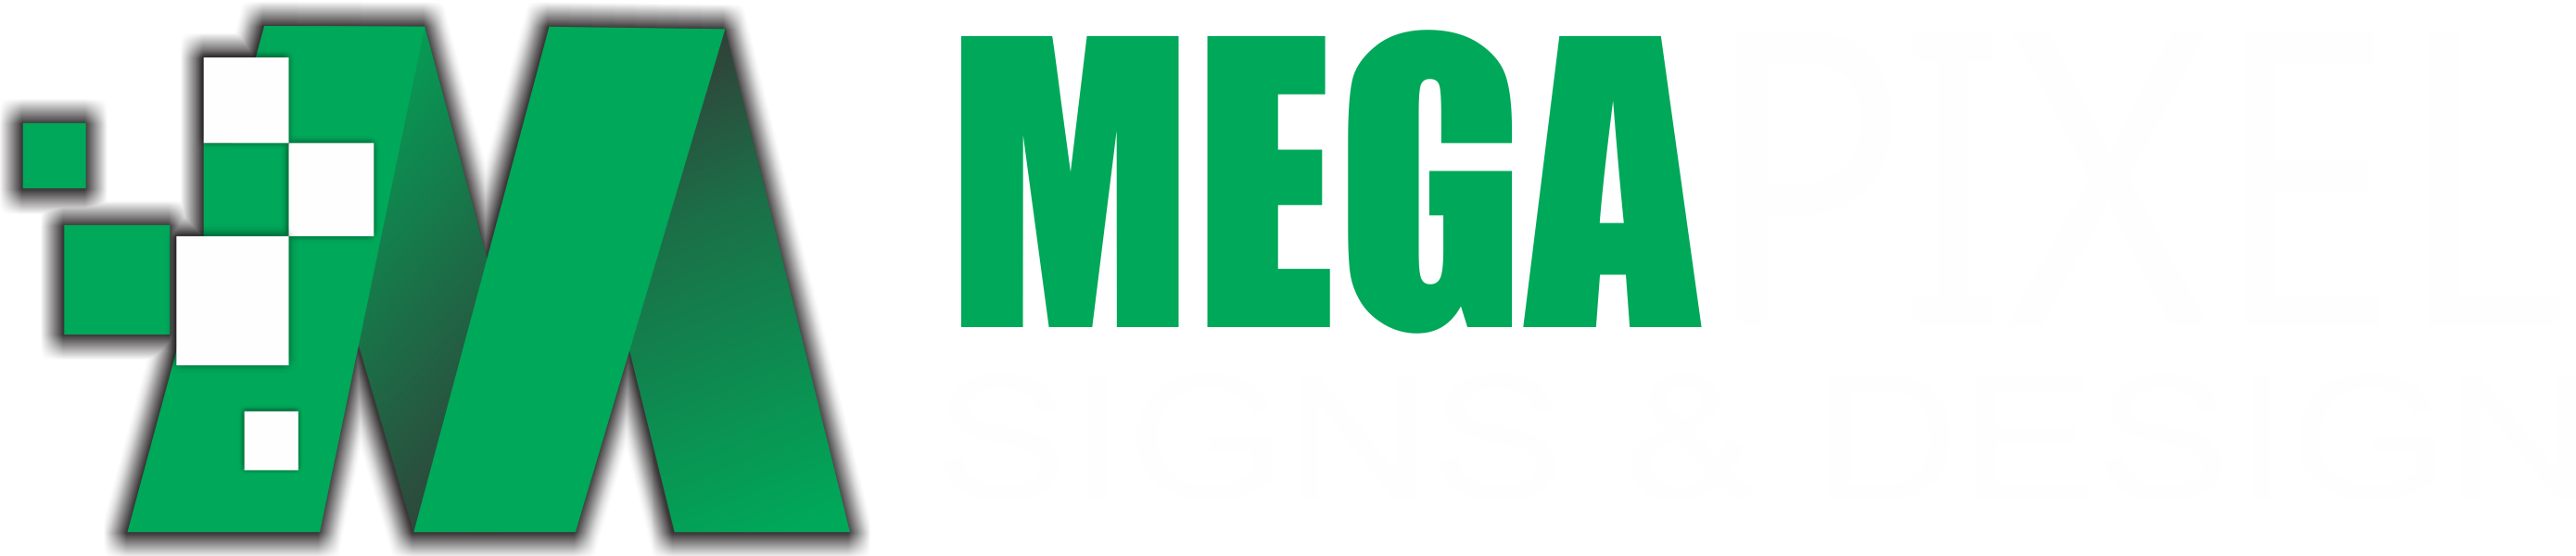 Megapixel Signs & Design